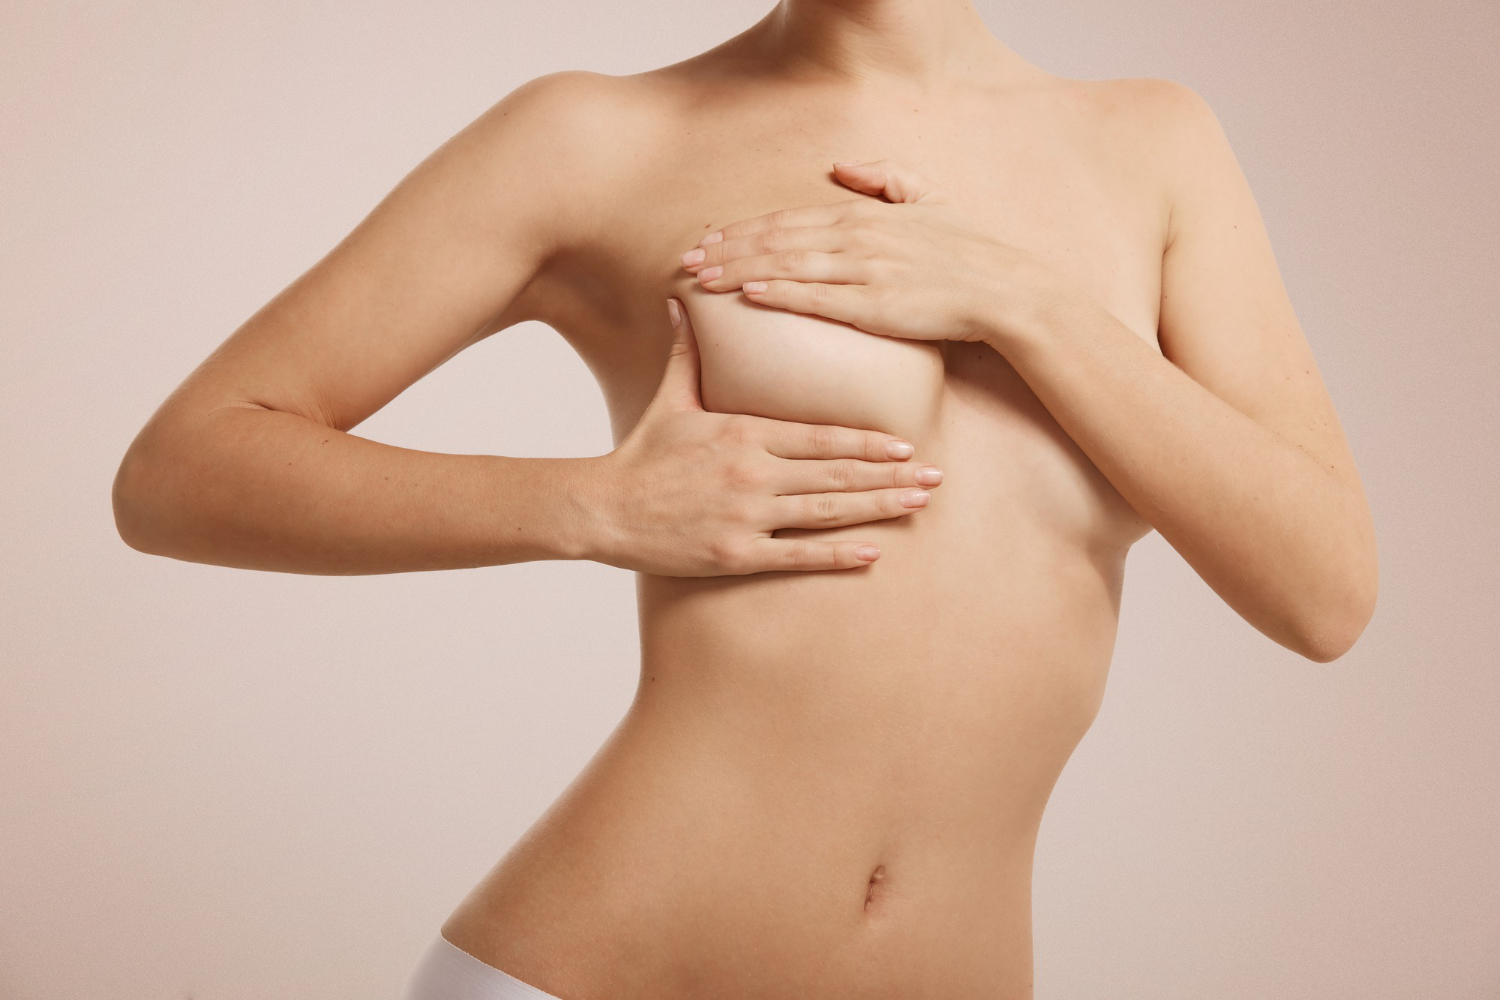 Breast Implant Illness Treatment in Miami